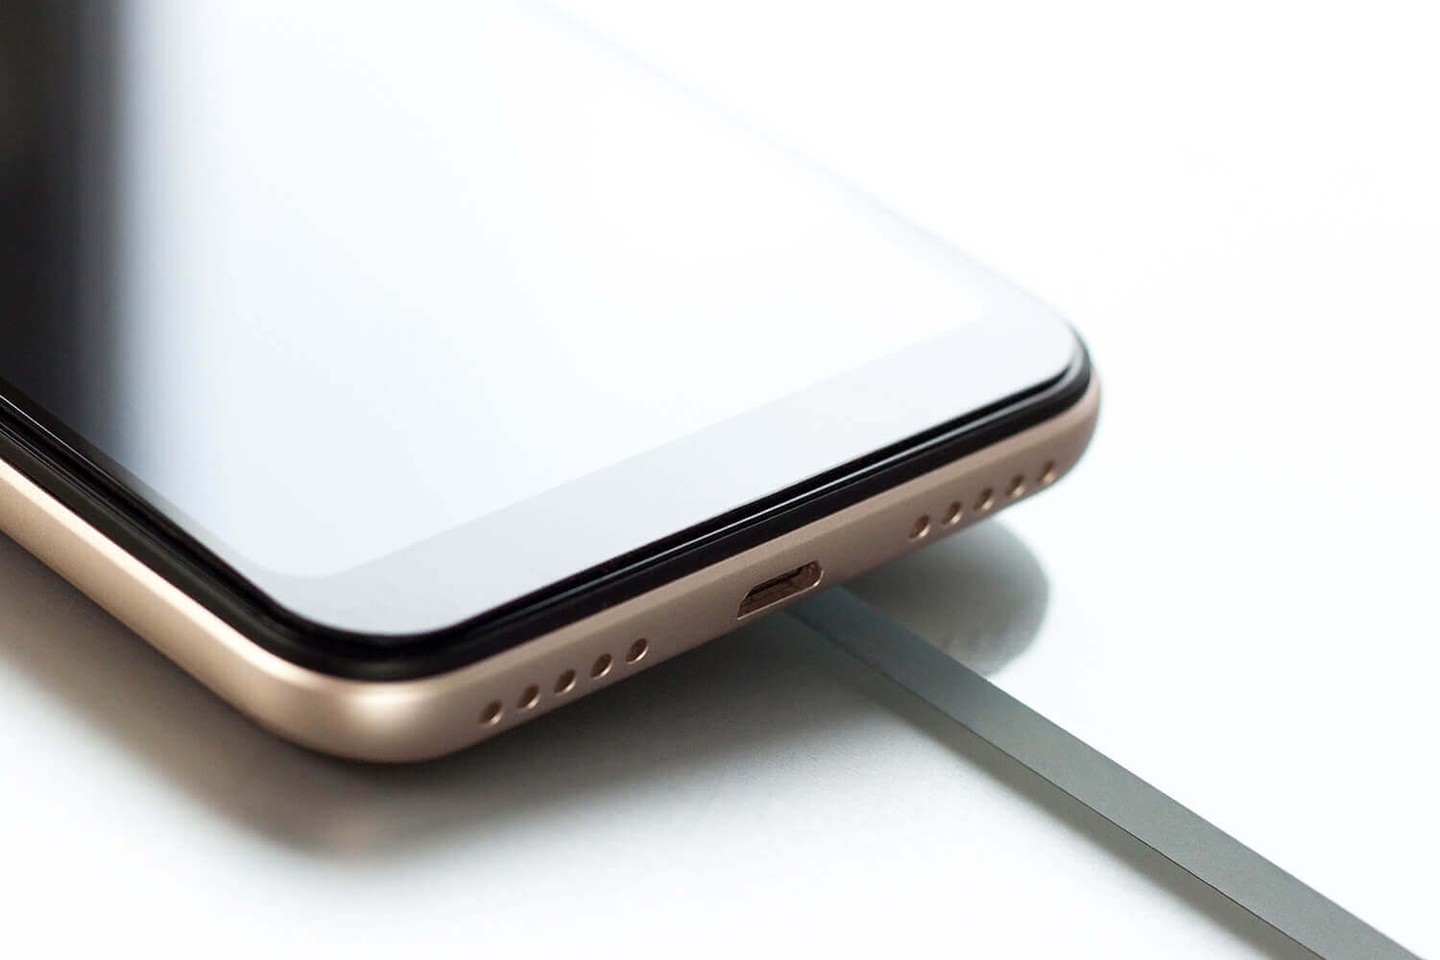  3MK HardGlass Max Lite Apple iPhone 8/7 white